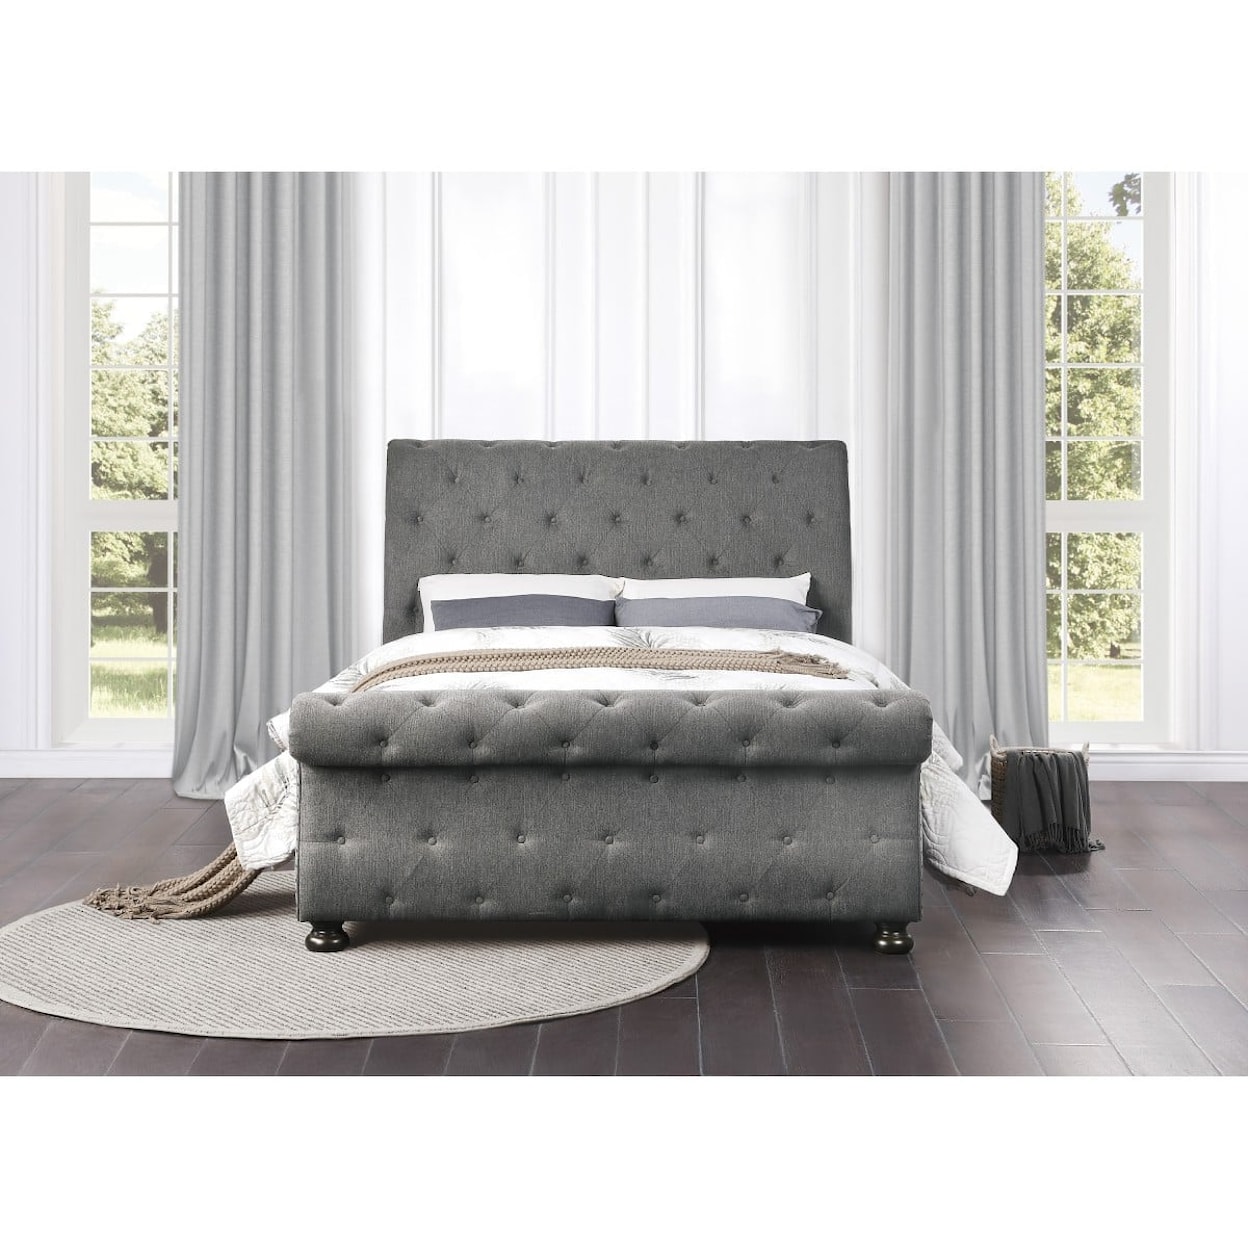 Homelegance Furniture Crofton Queen Bed